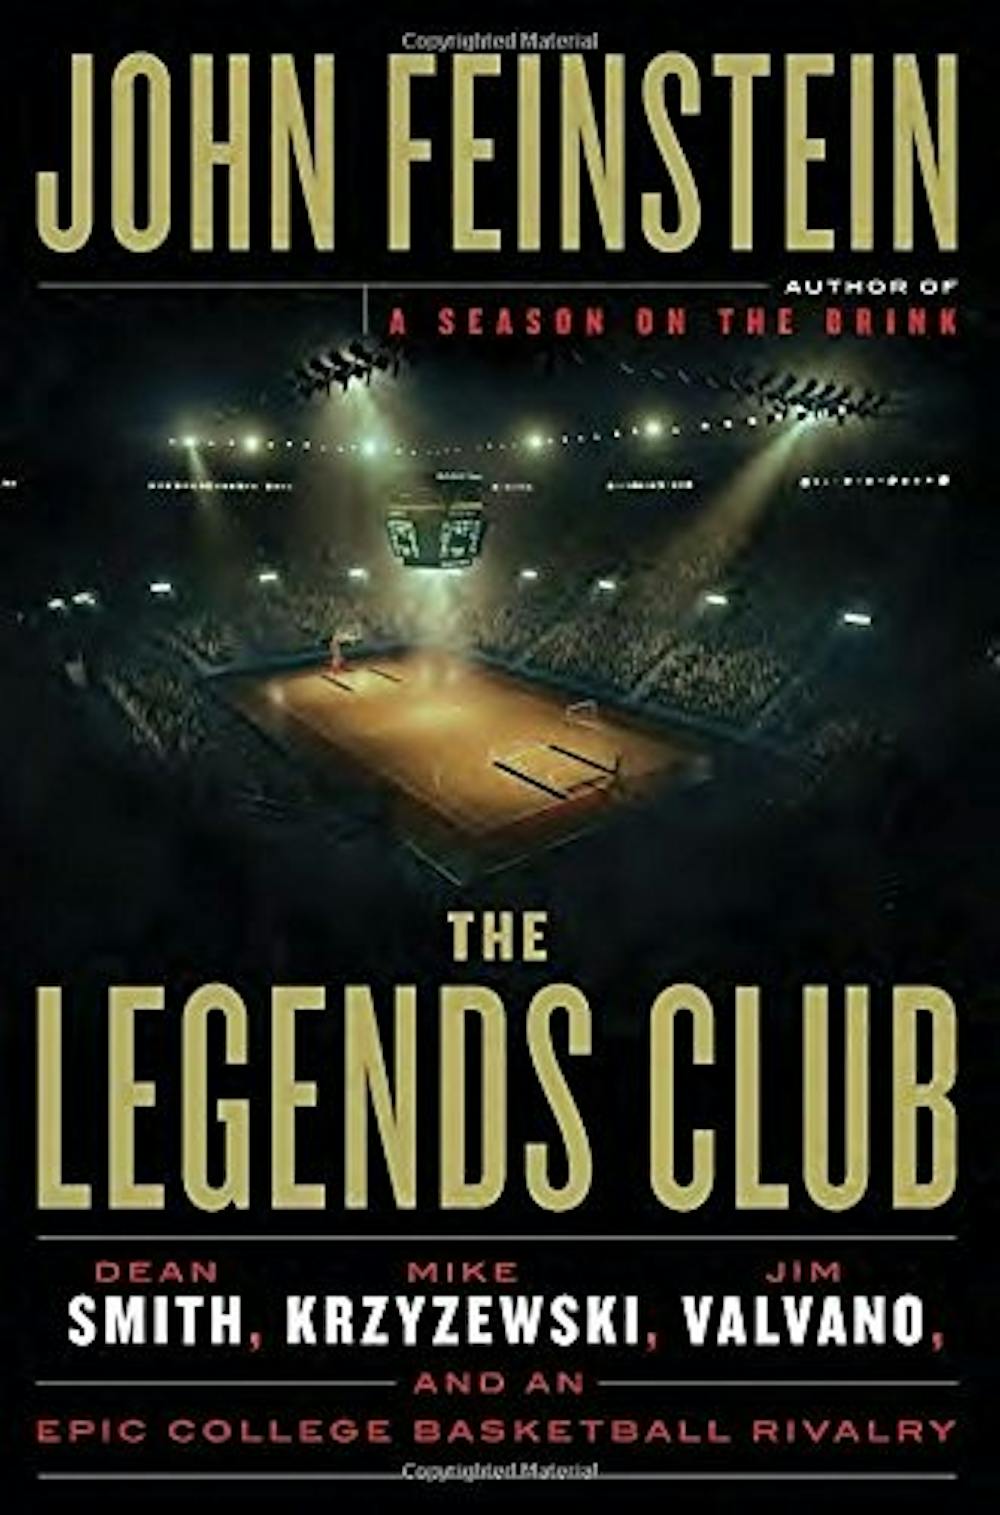 <p>John Feinstein will discuss his latest book&mdash;The Legends Club: Dean Smith, Mike Krzyzewski, Jim Valvano and an Epic College Basketball Rivalry&mdash;Friday night at The Regulator Bookshop.</p>